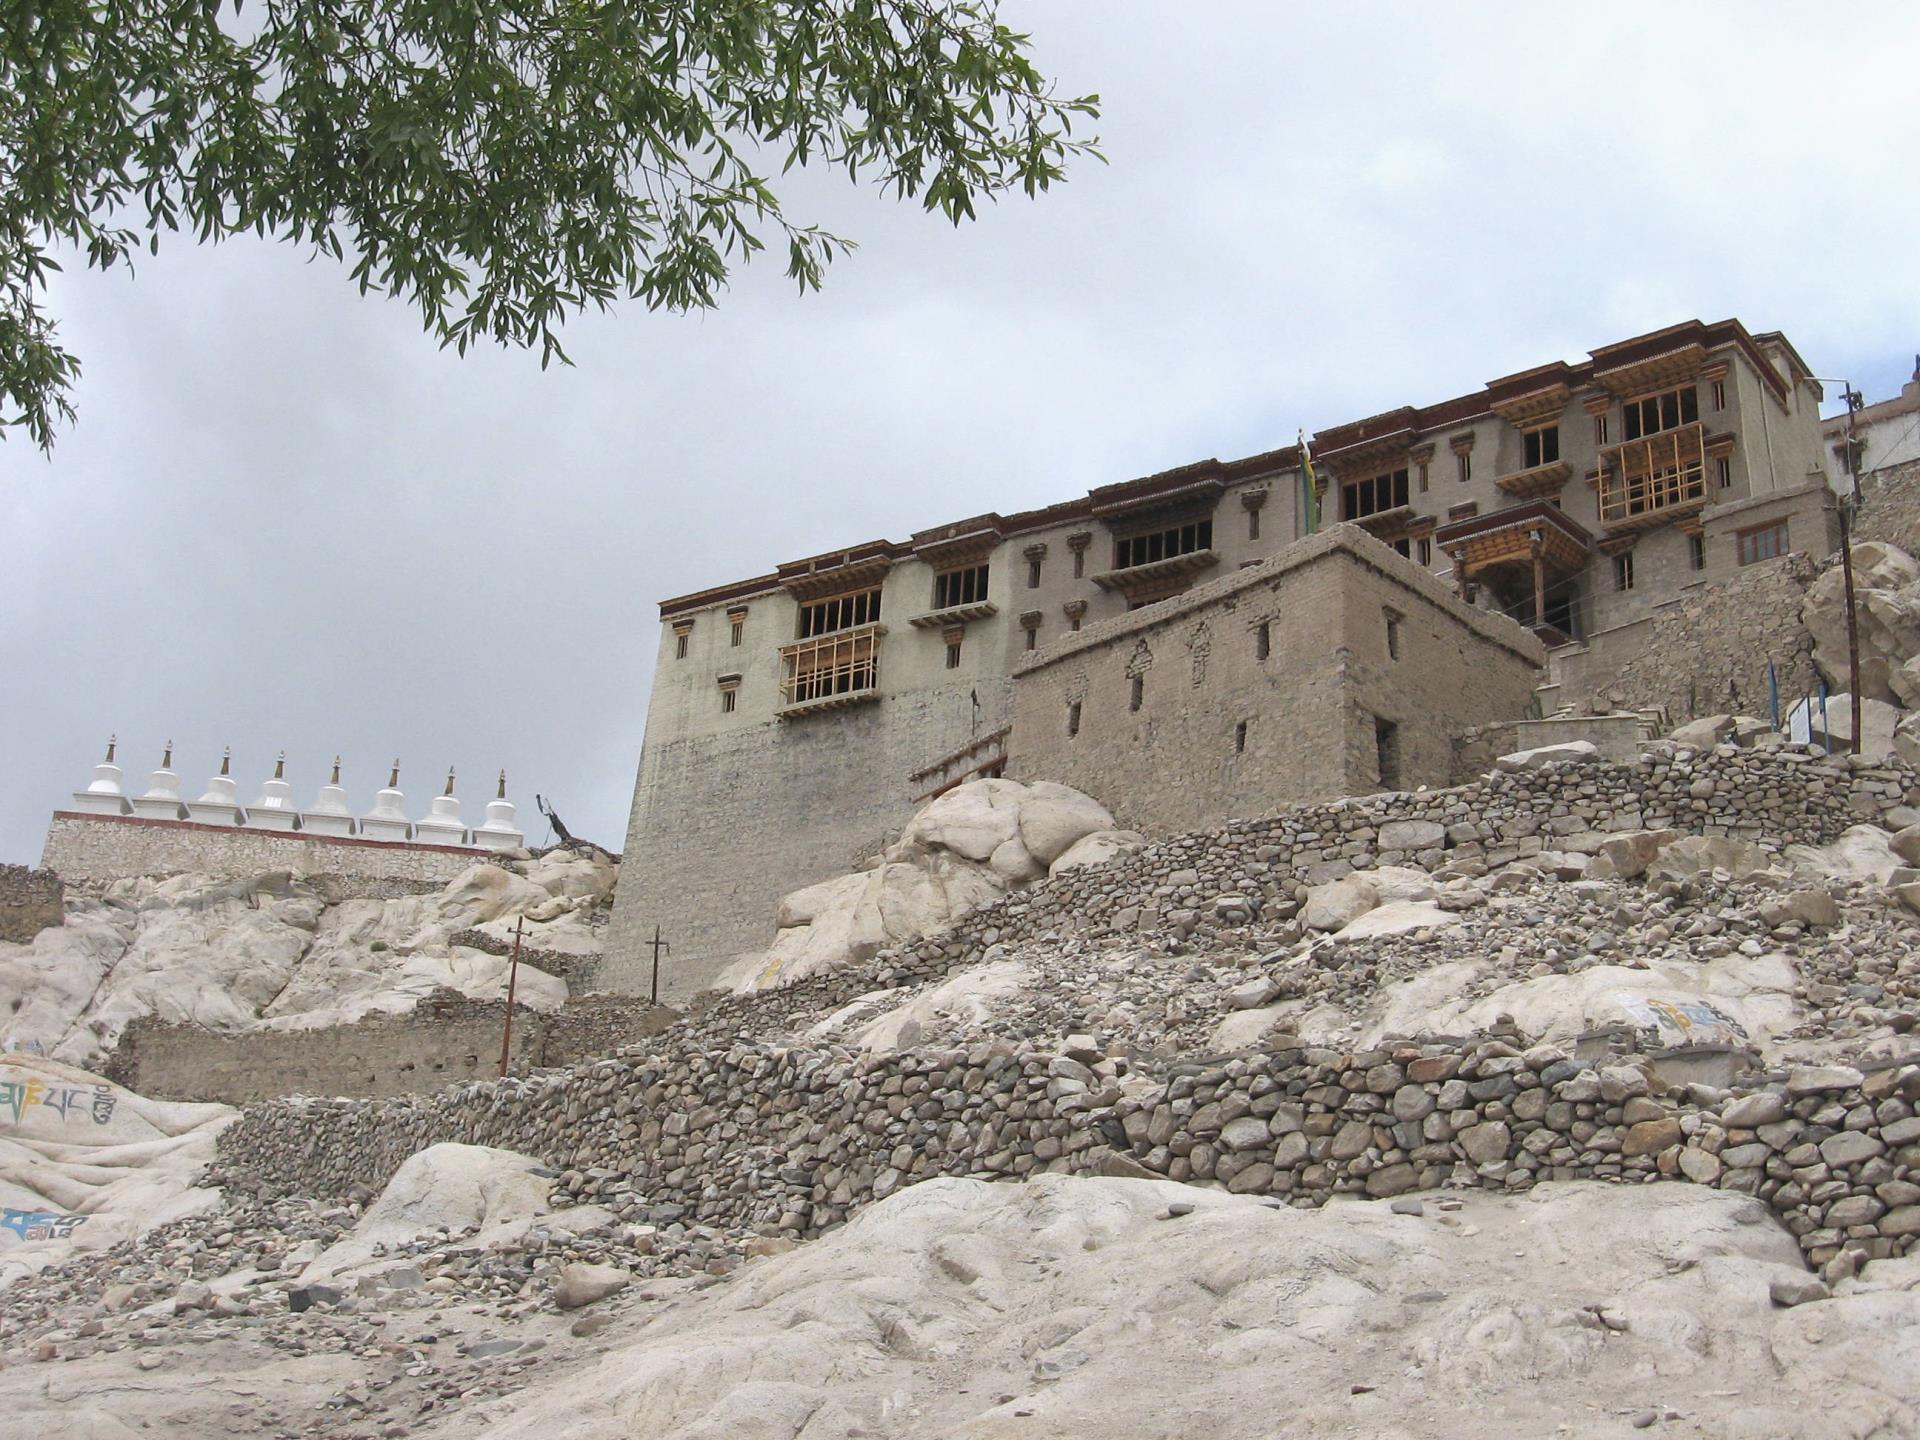 Shey Palace and Monastery